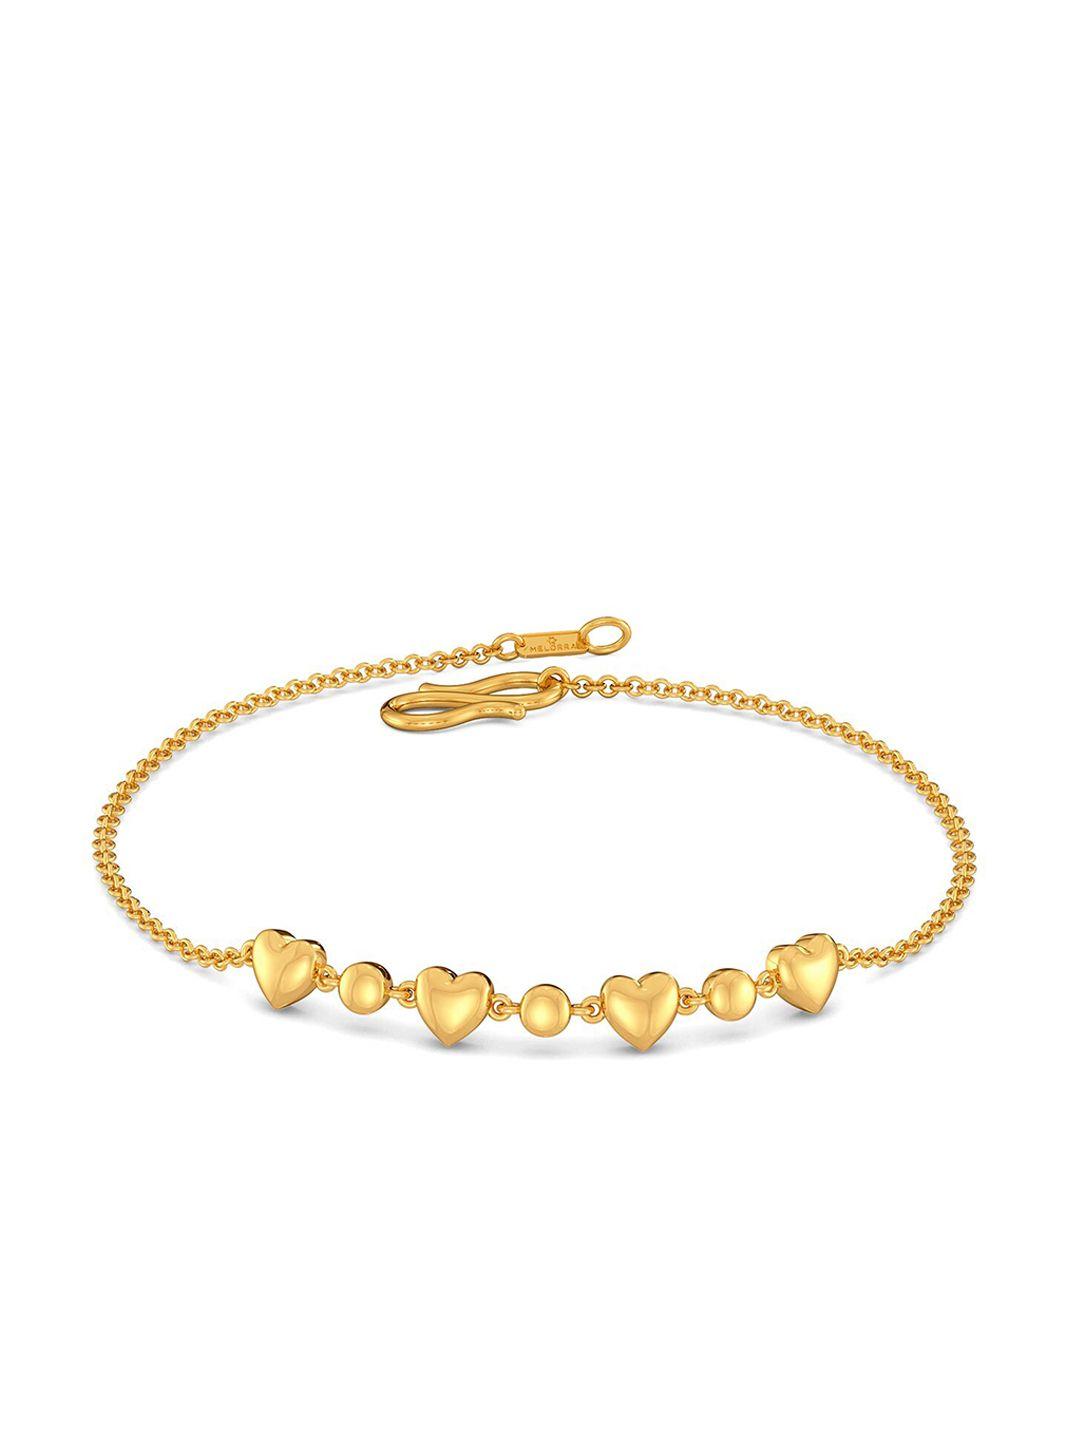 melorra disco hearts 18kt gold bracelet - 3.43 gm